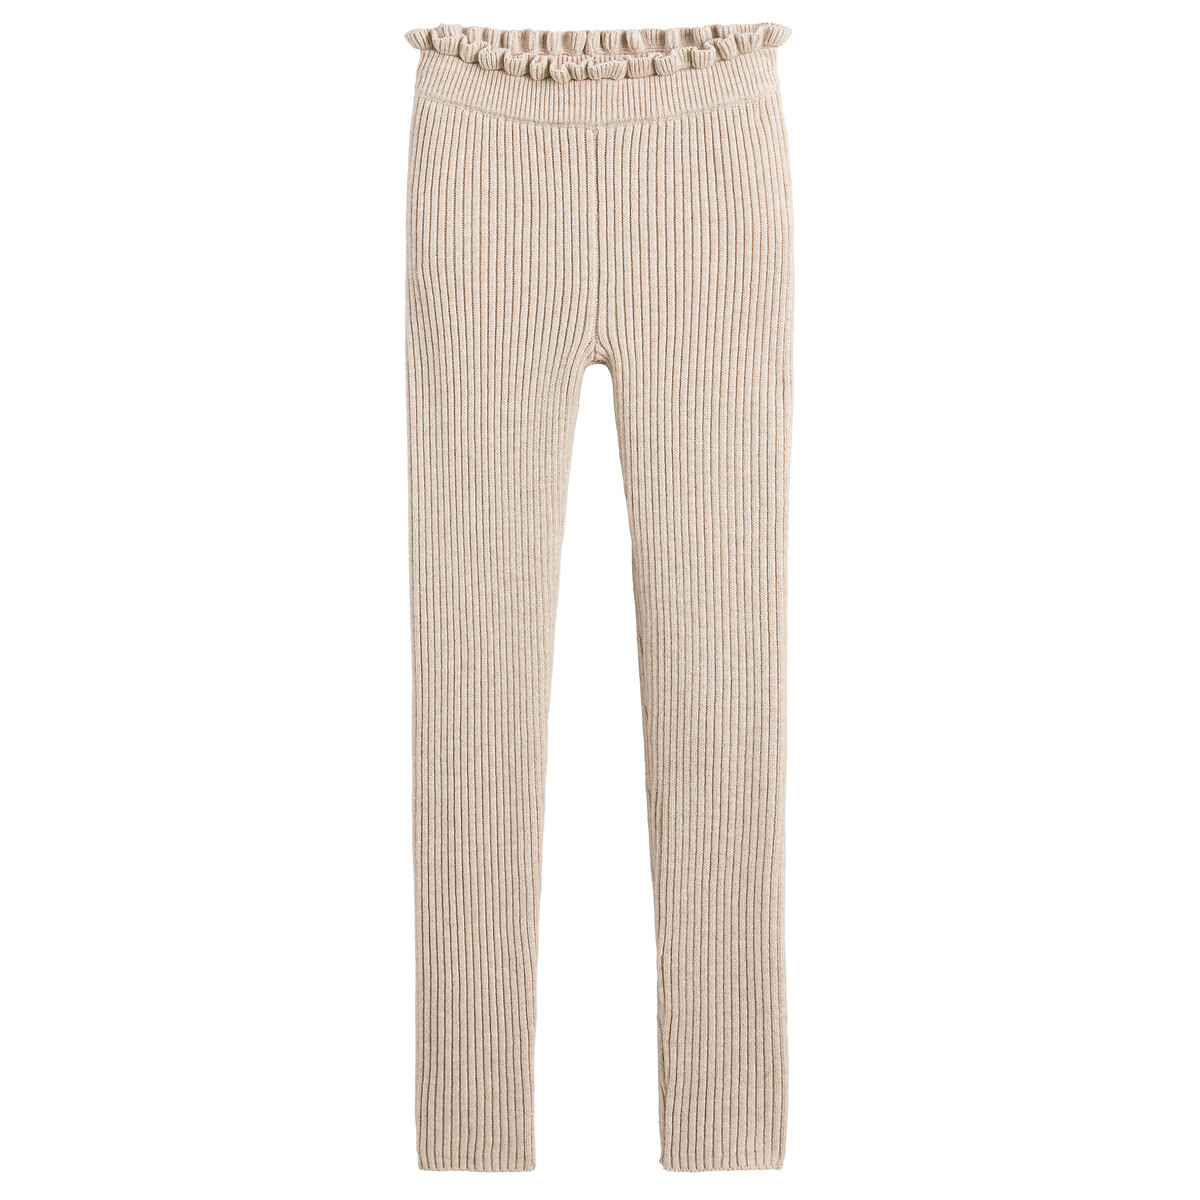 Cotton/Wool Knit Leggings